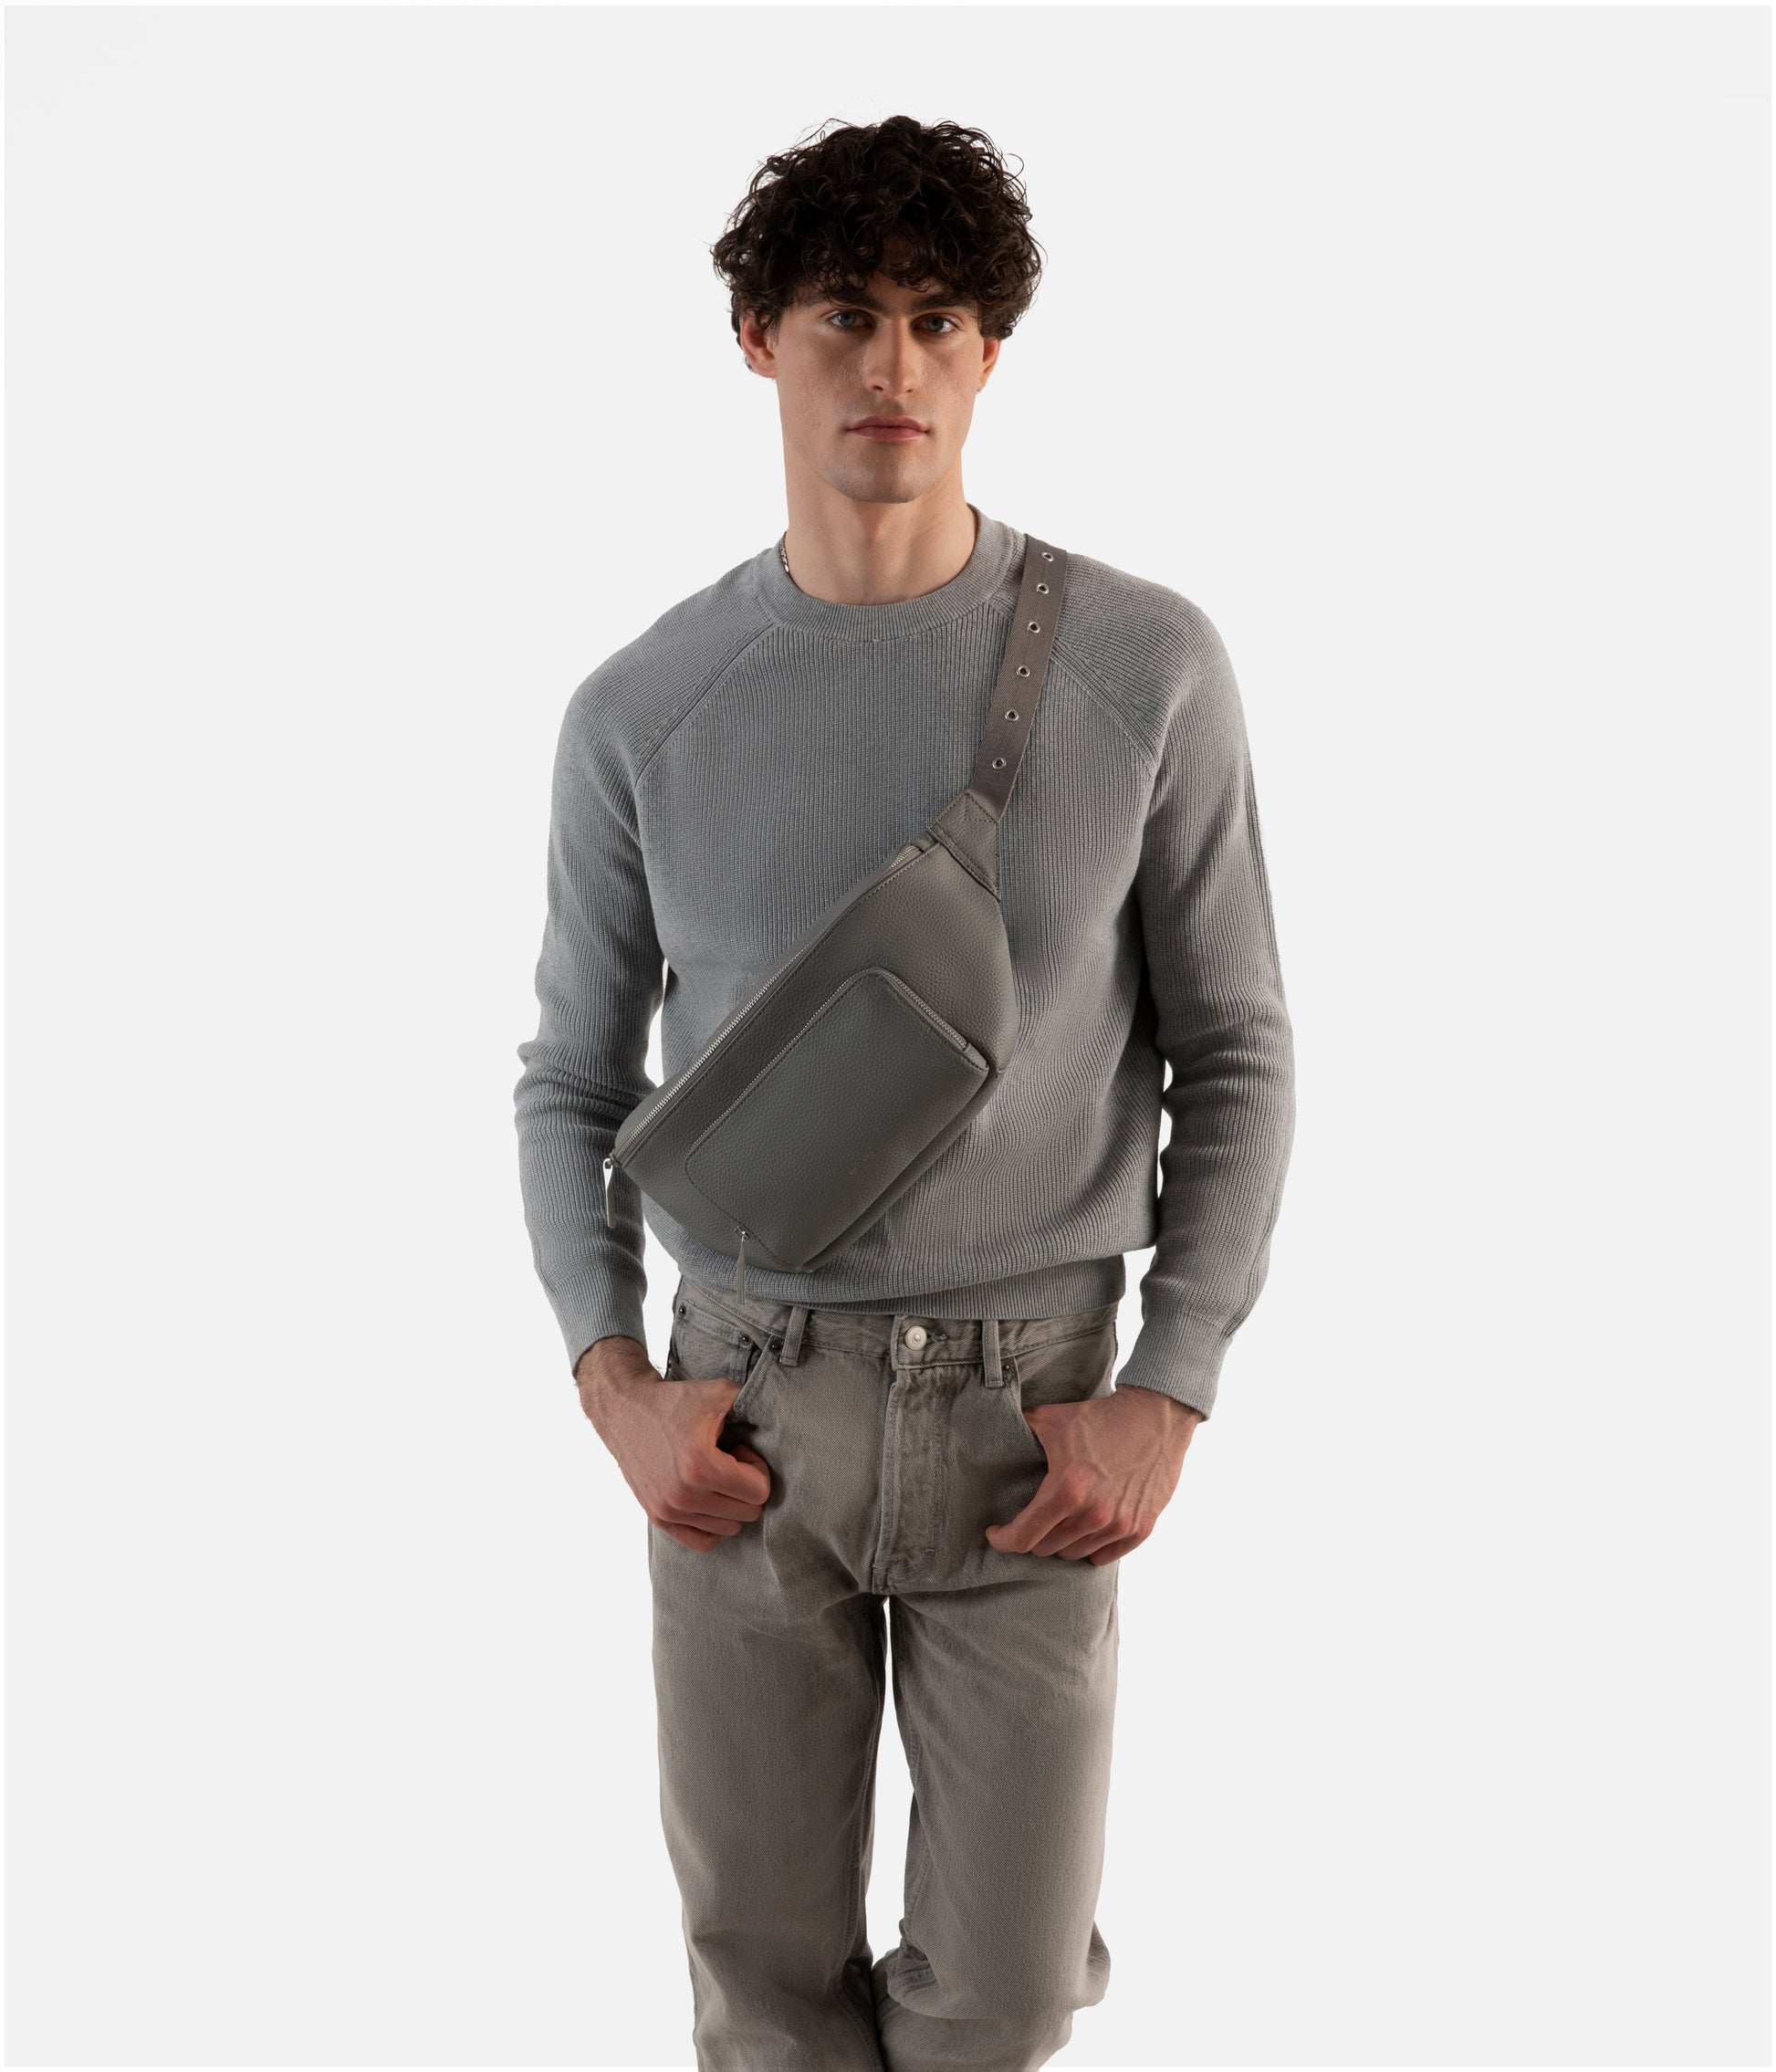 OLEK Vegan Belt Bag - Purity | Color: Grey - variant::shade